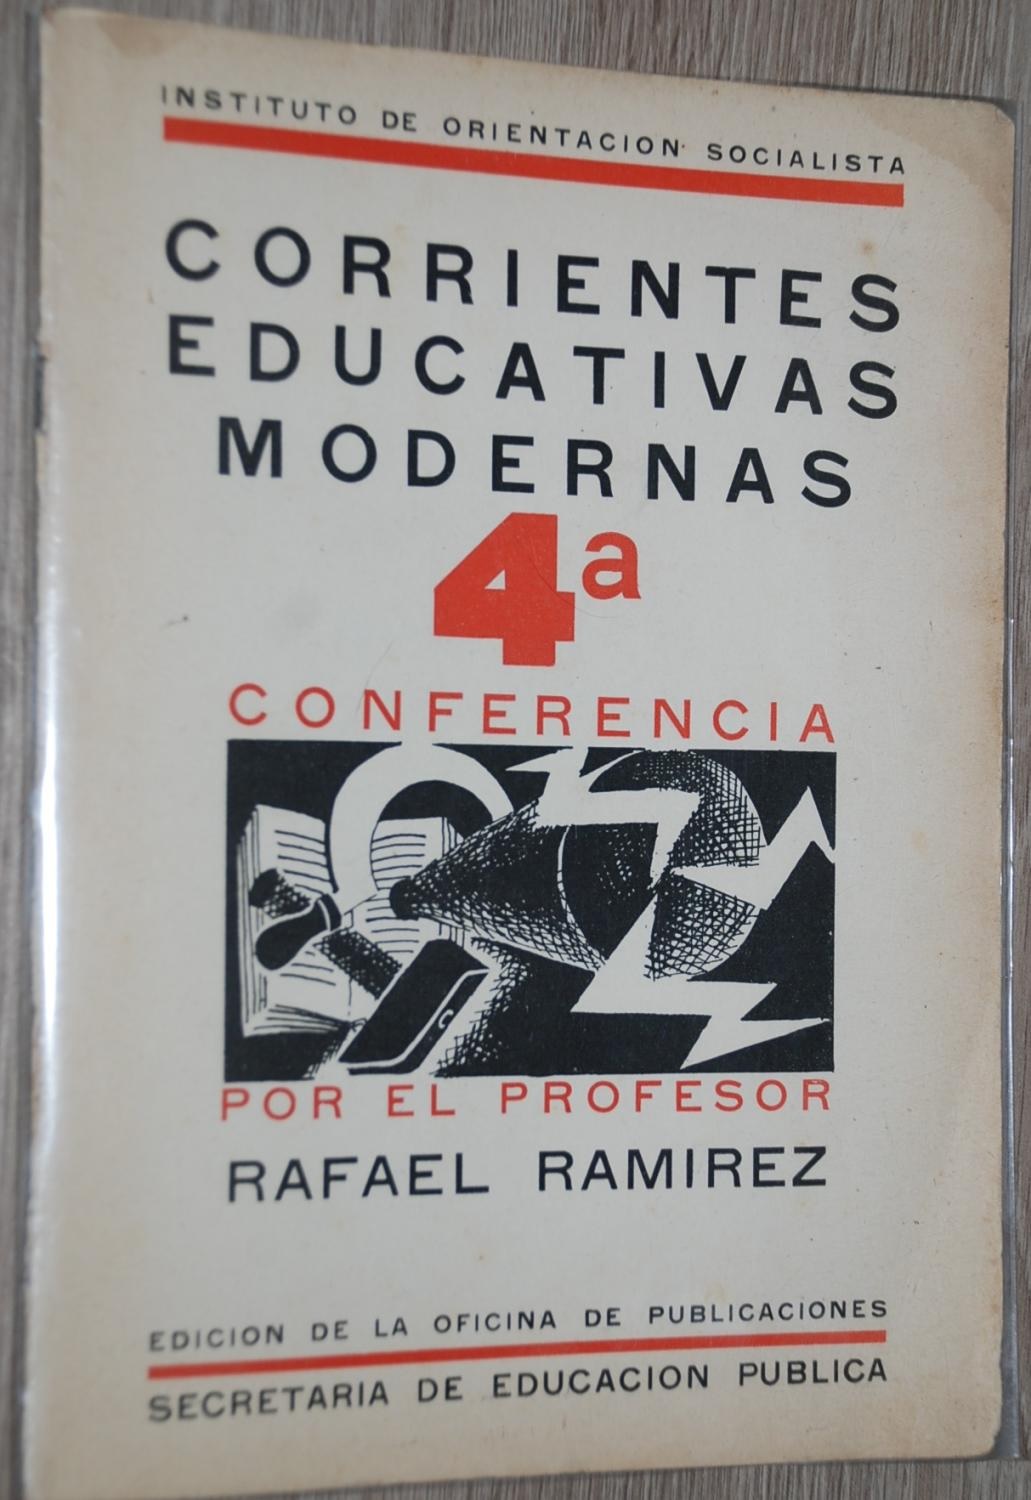 Rafael Ramirez. Corrientes educativas modernas: 4a conferencia